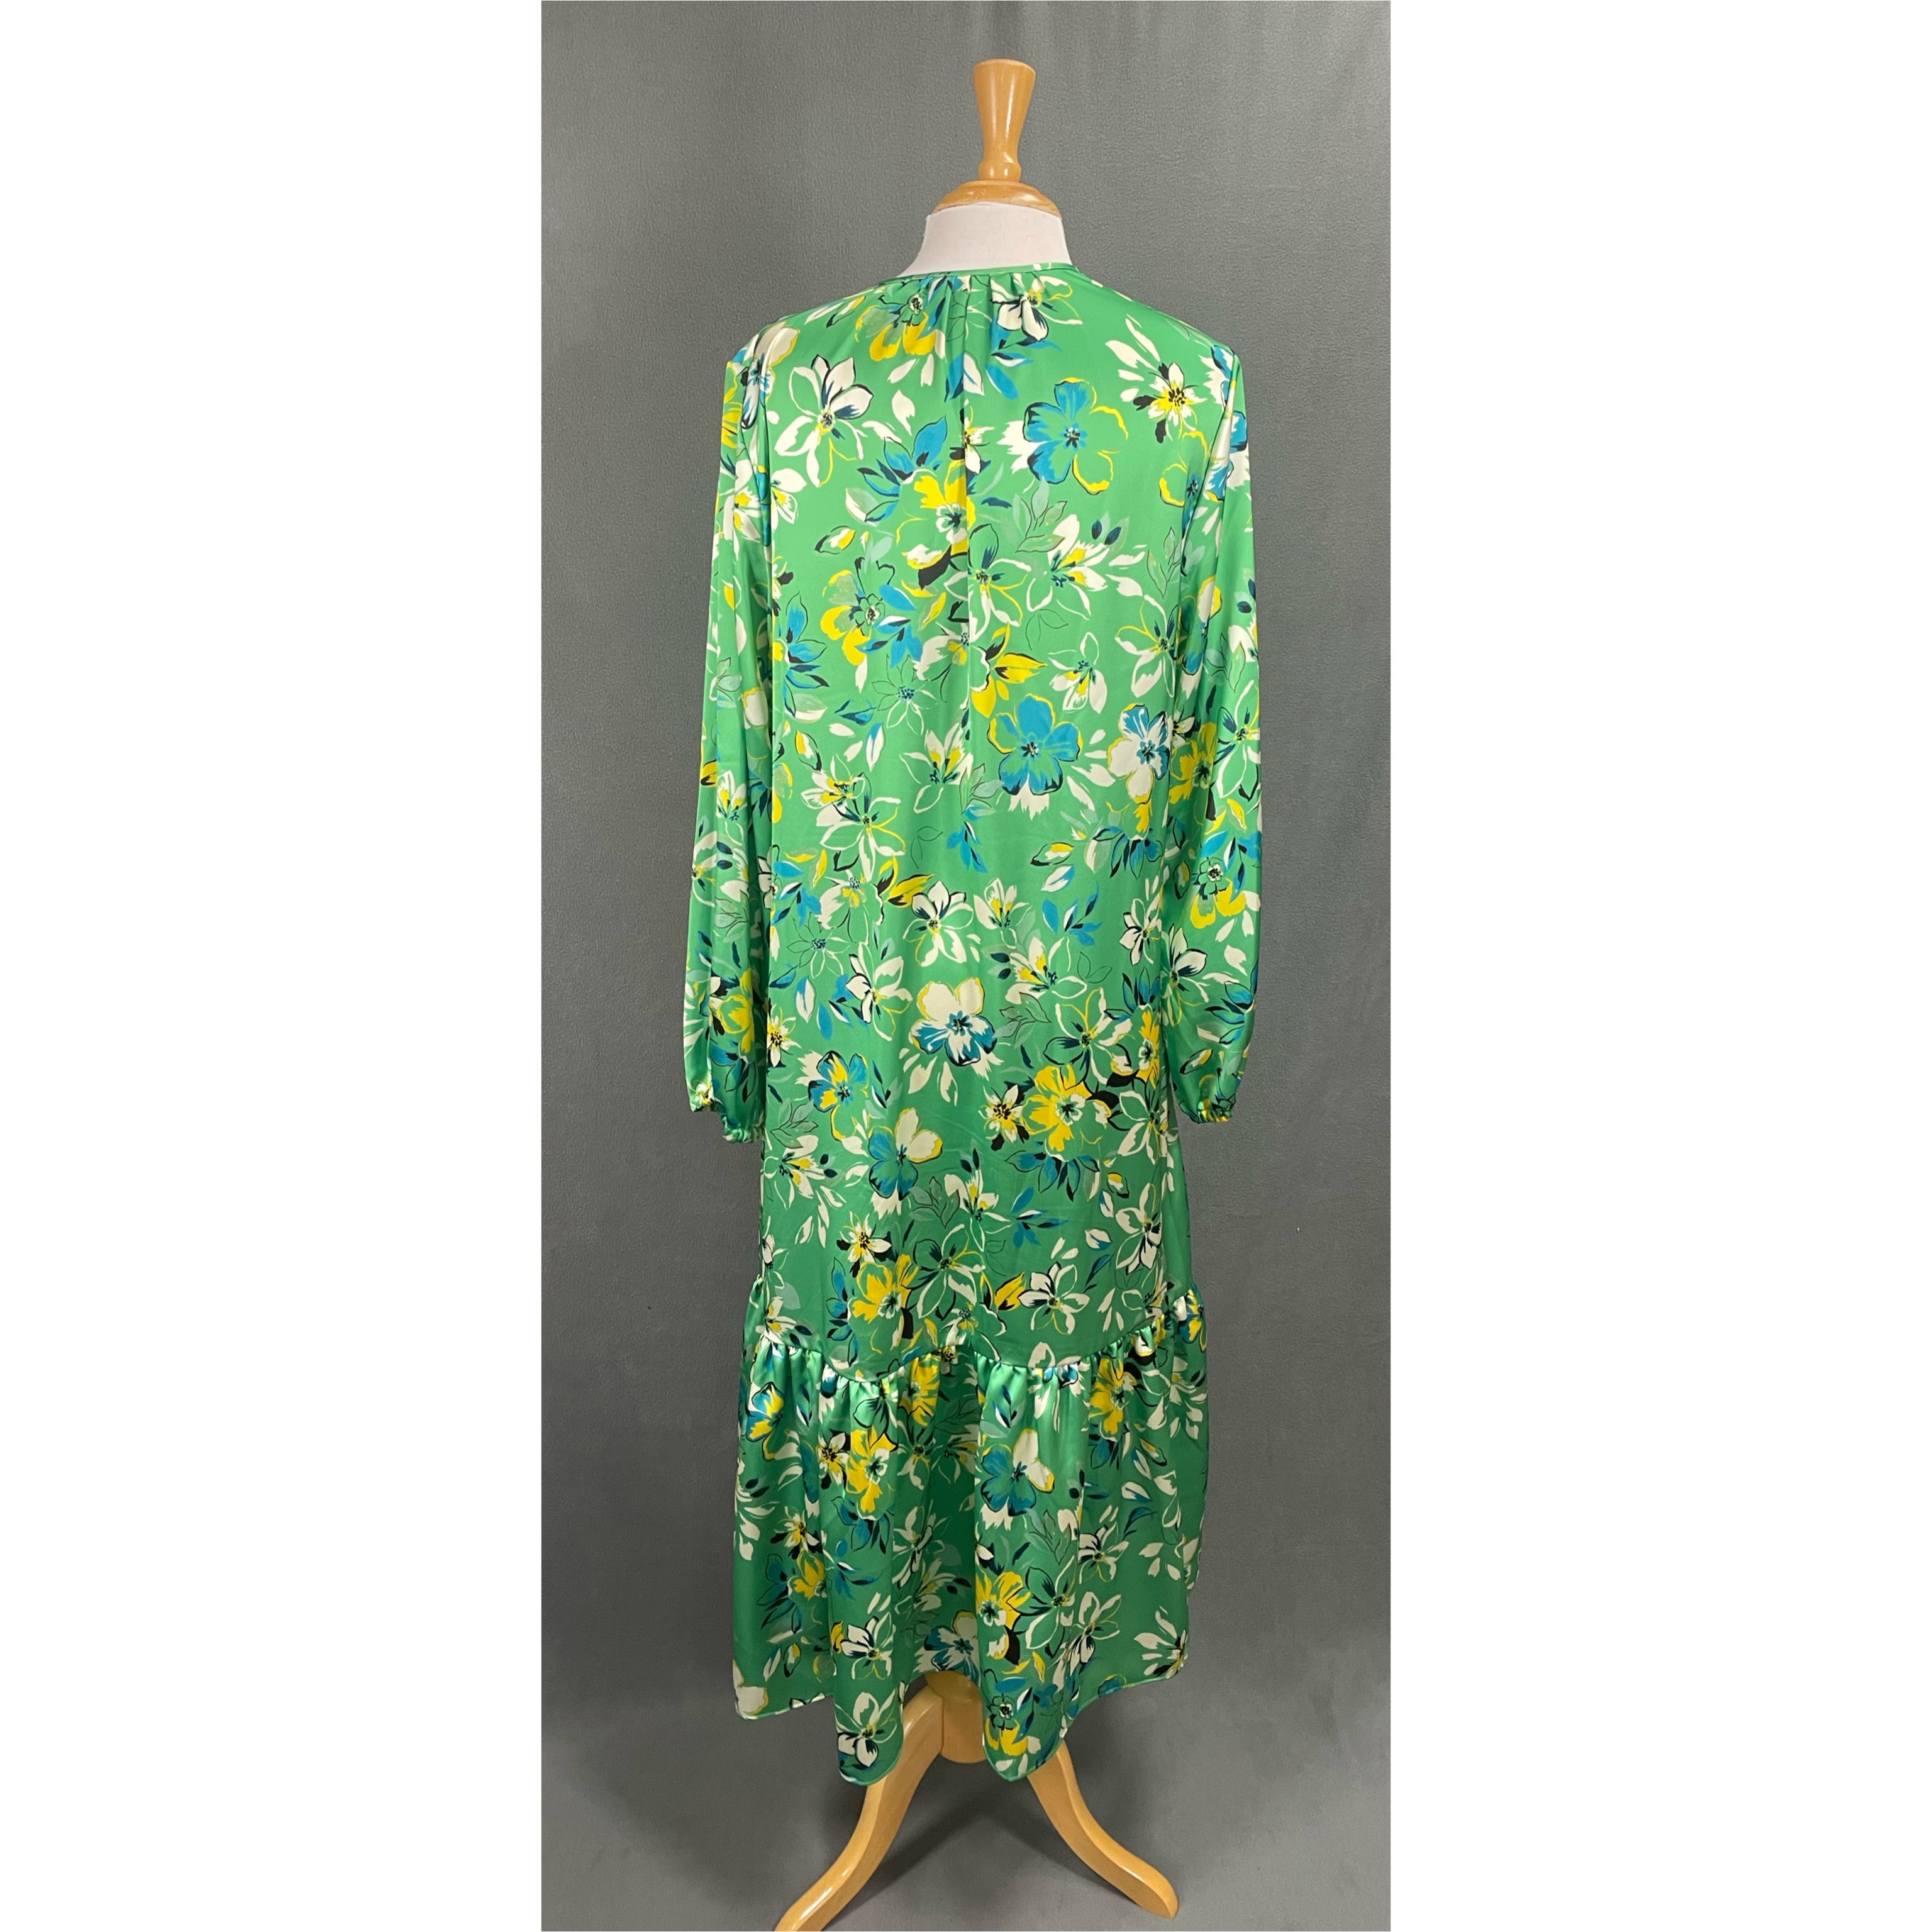 Ann Mashburn green floral dress, size L